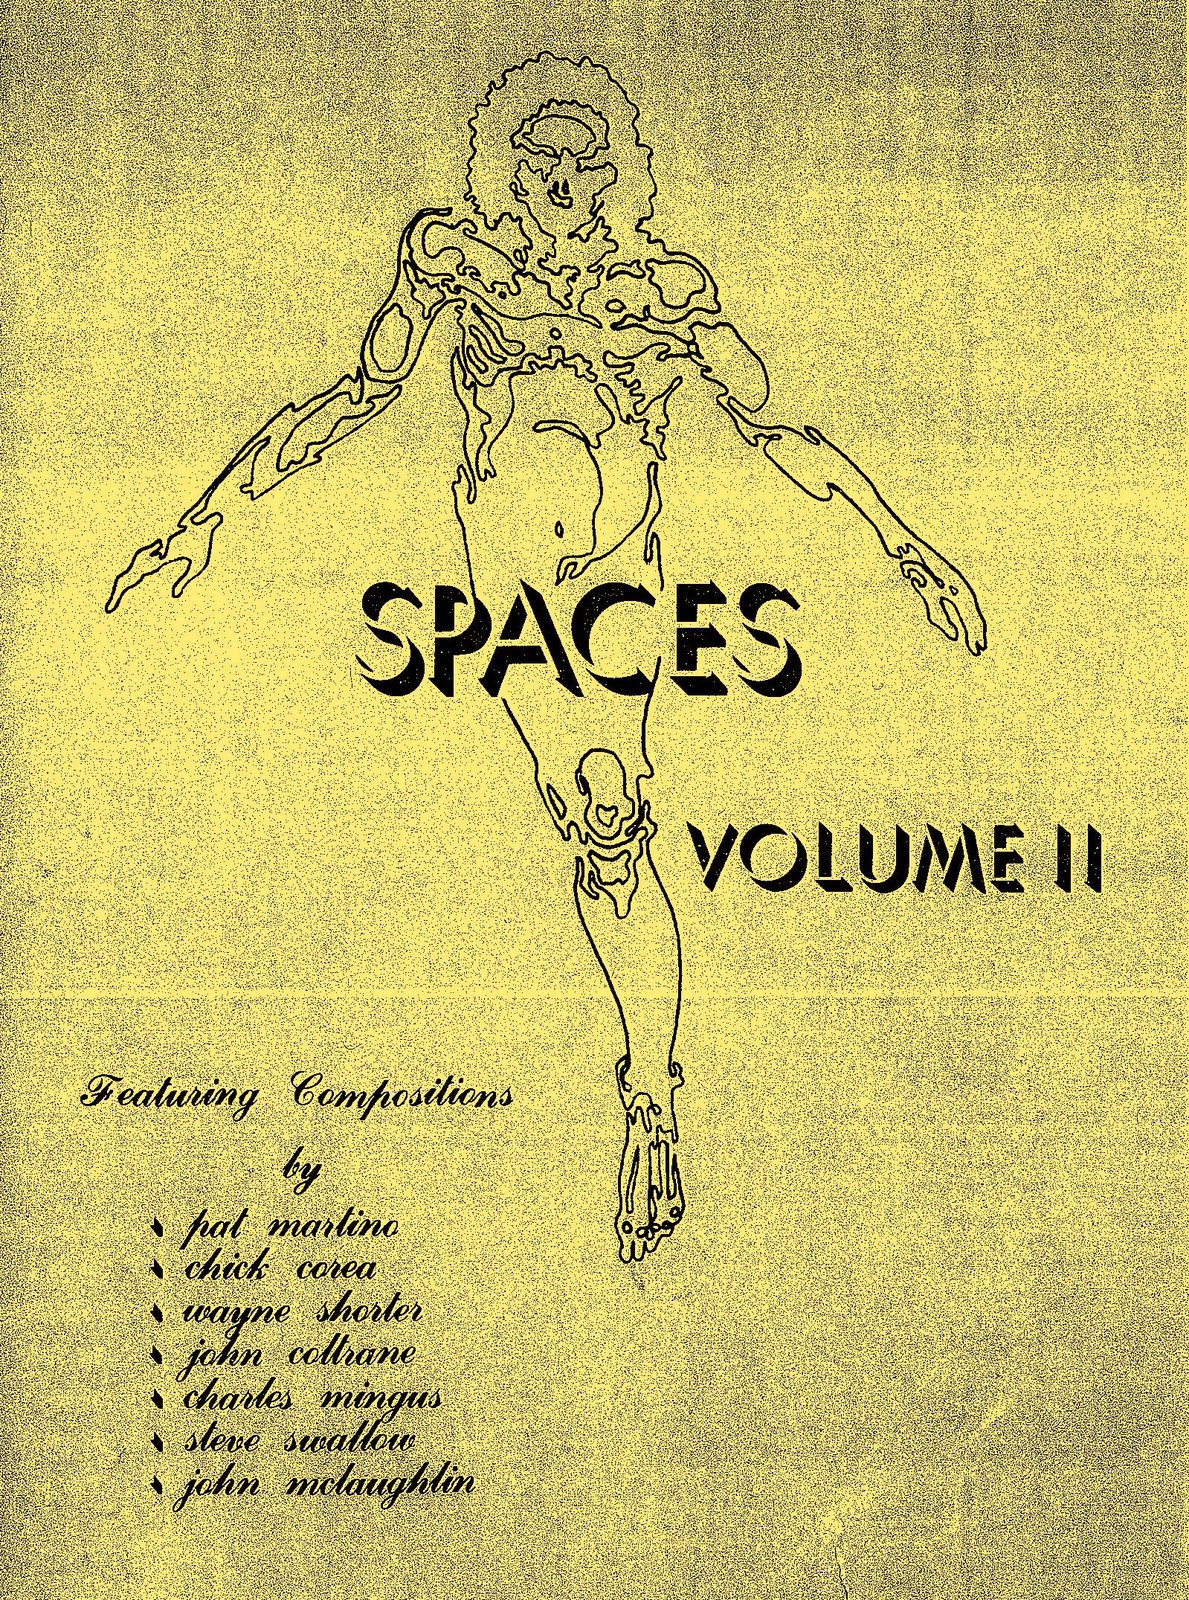 [The+Spaces+Real+Book+Vol.+II.JPG]